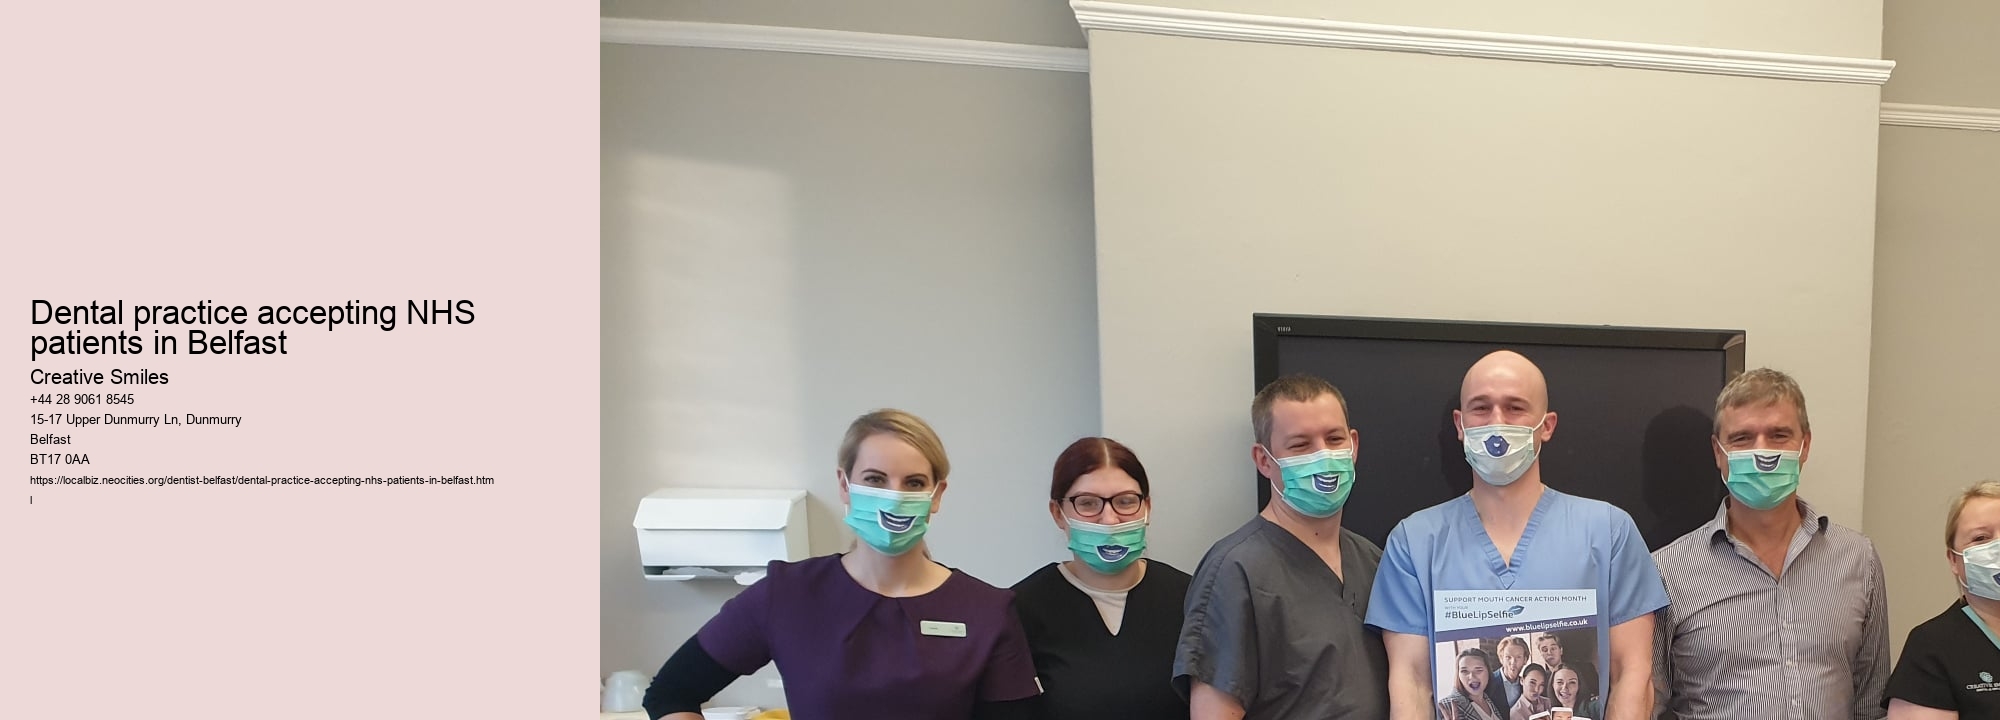 Dental practice accepting NHS patients in Belfast